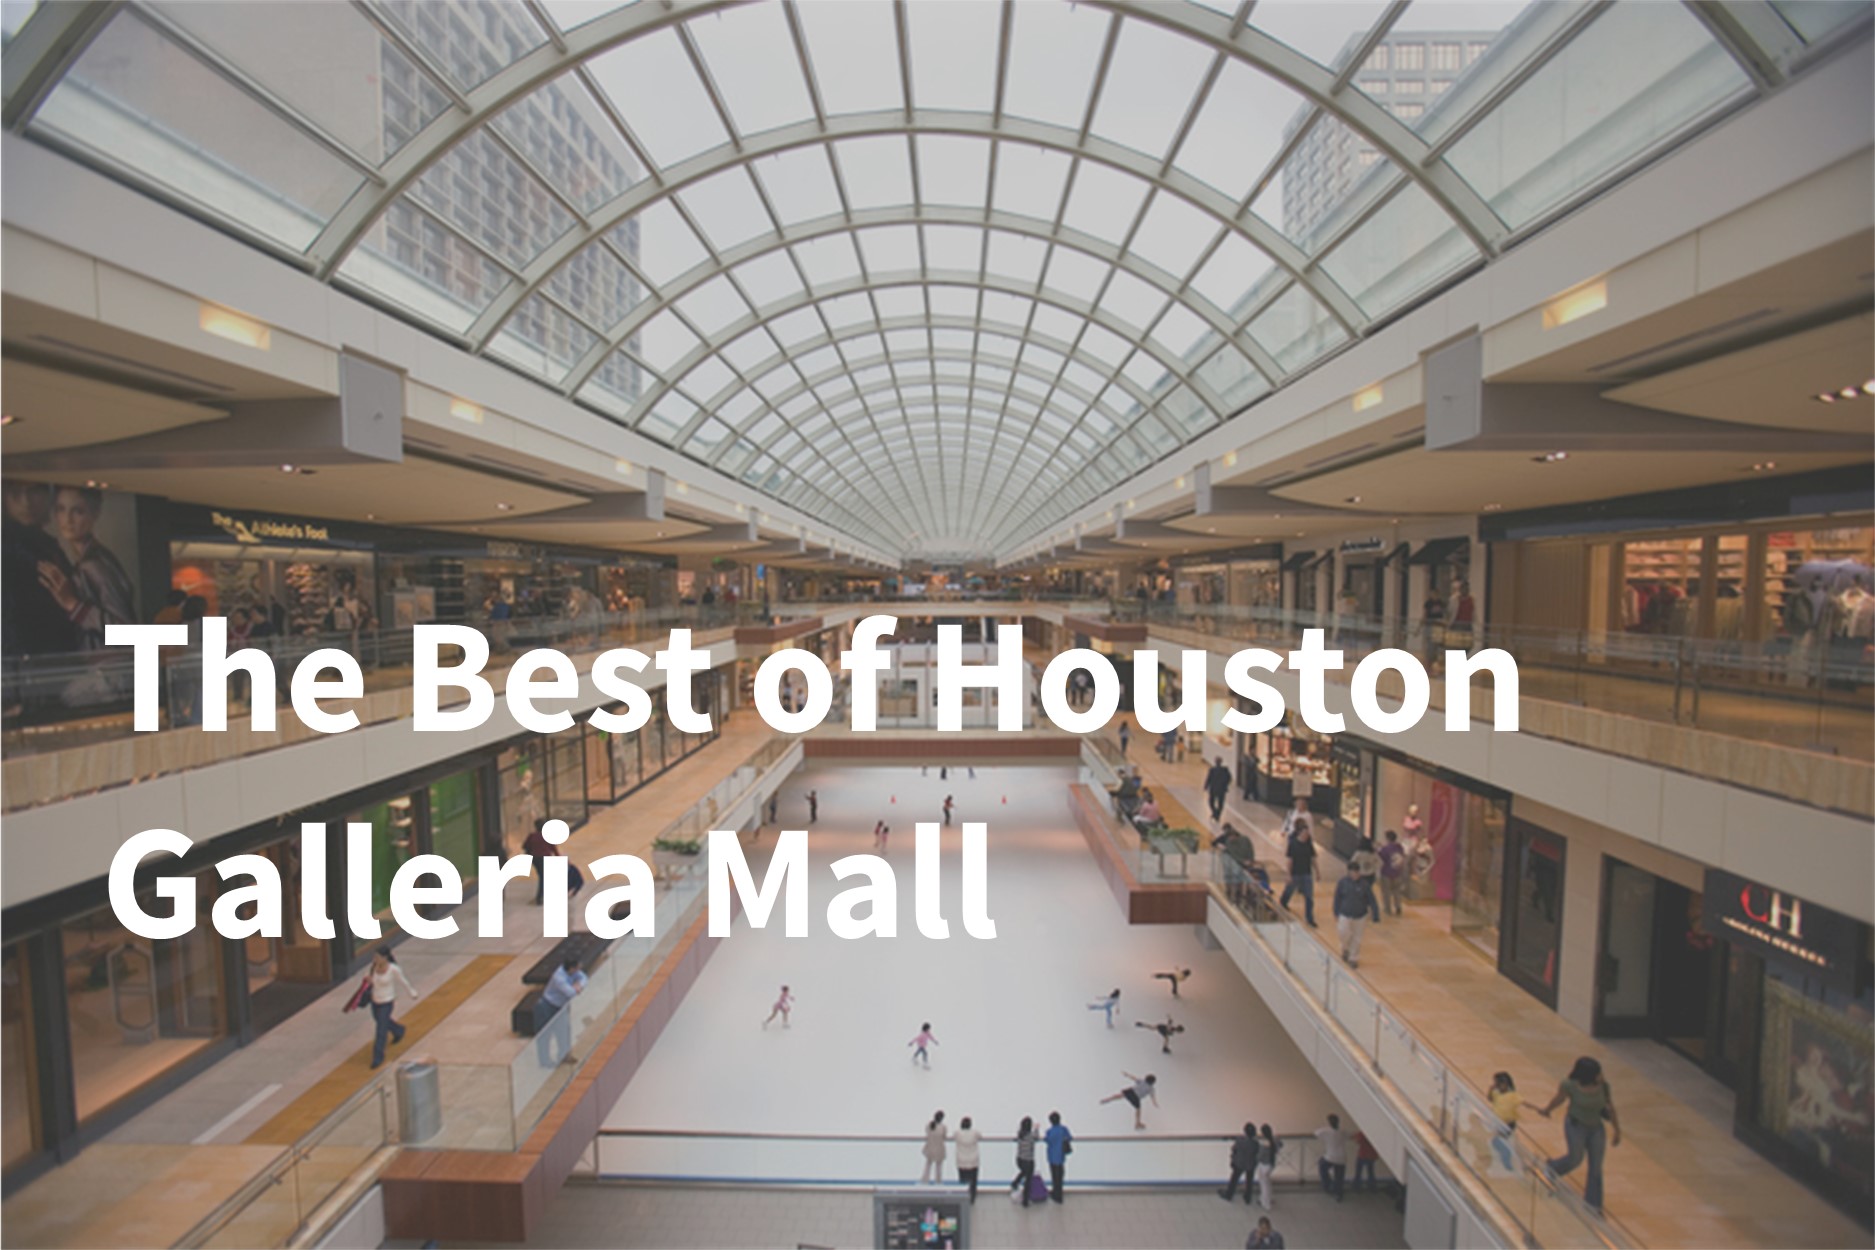 About The Galleria - A Shopping Center in Houston, TX - A Simon